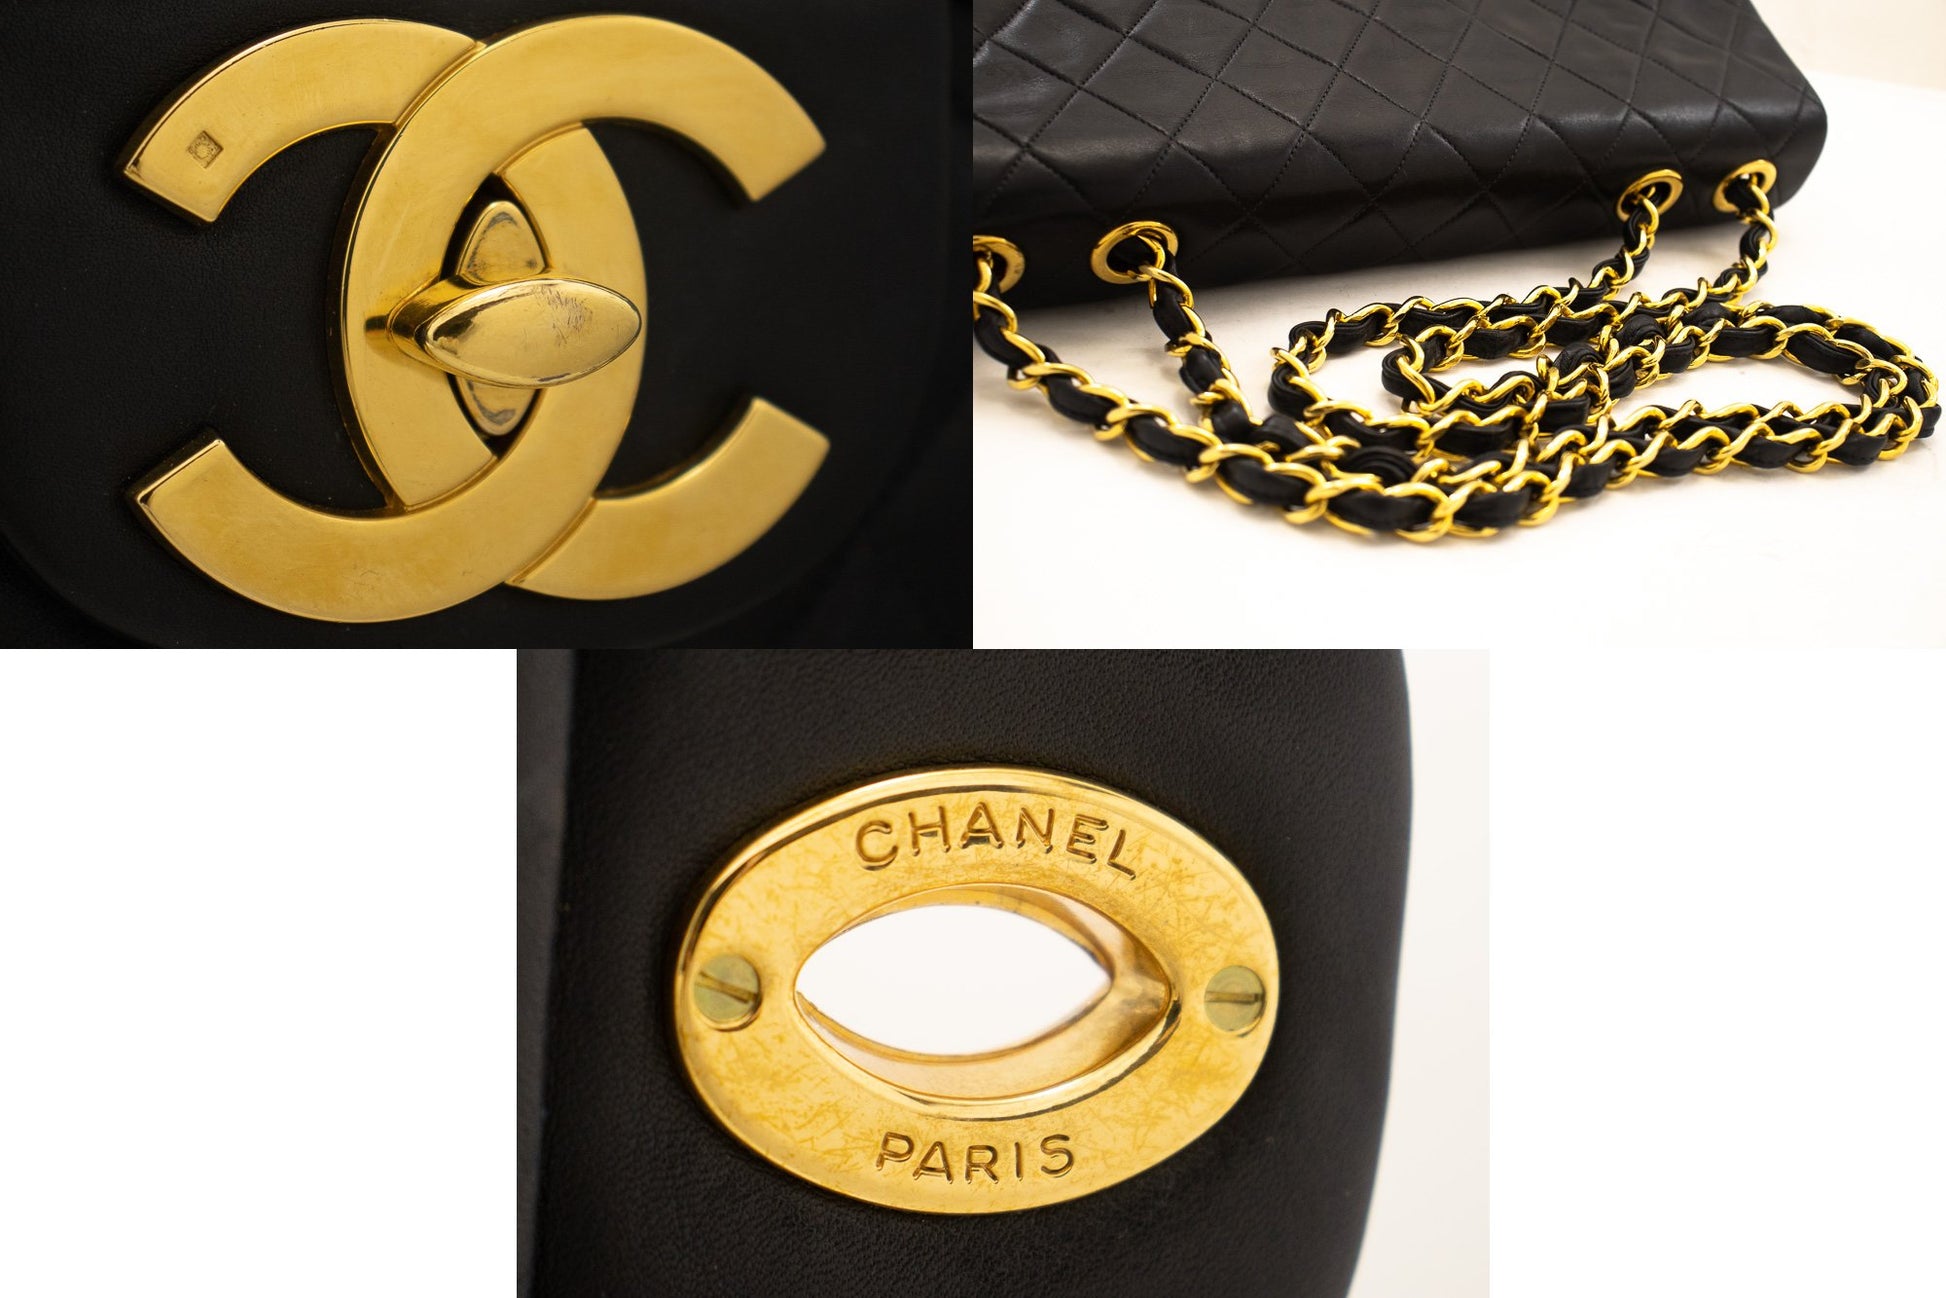 Chanel Bag 1995 - 22 For Sale on 1stDibs  chanel 1995 heart bag, chanel  heart bag 1995, chanel 1995 classic flap